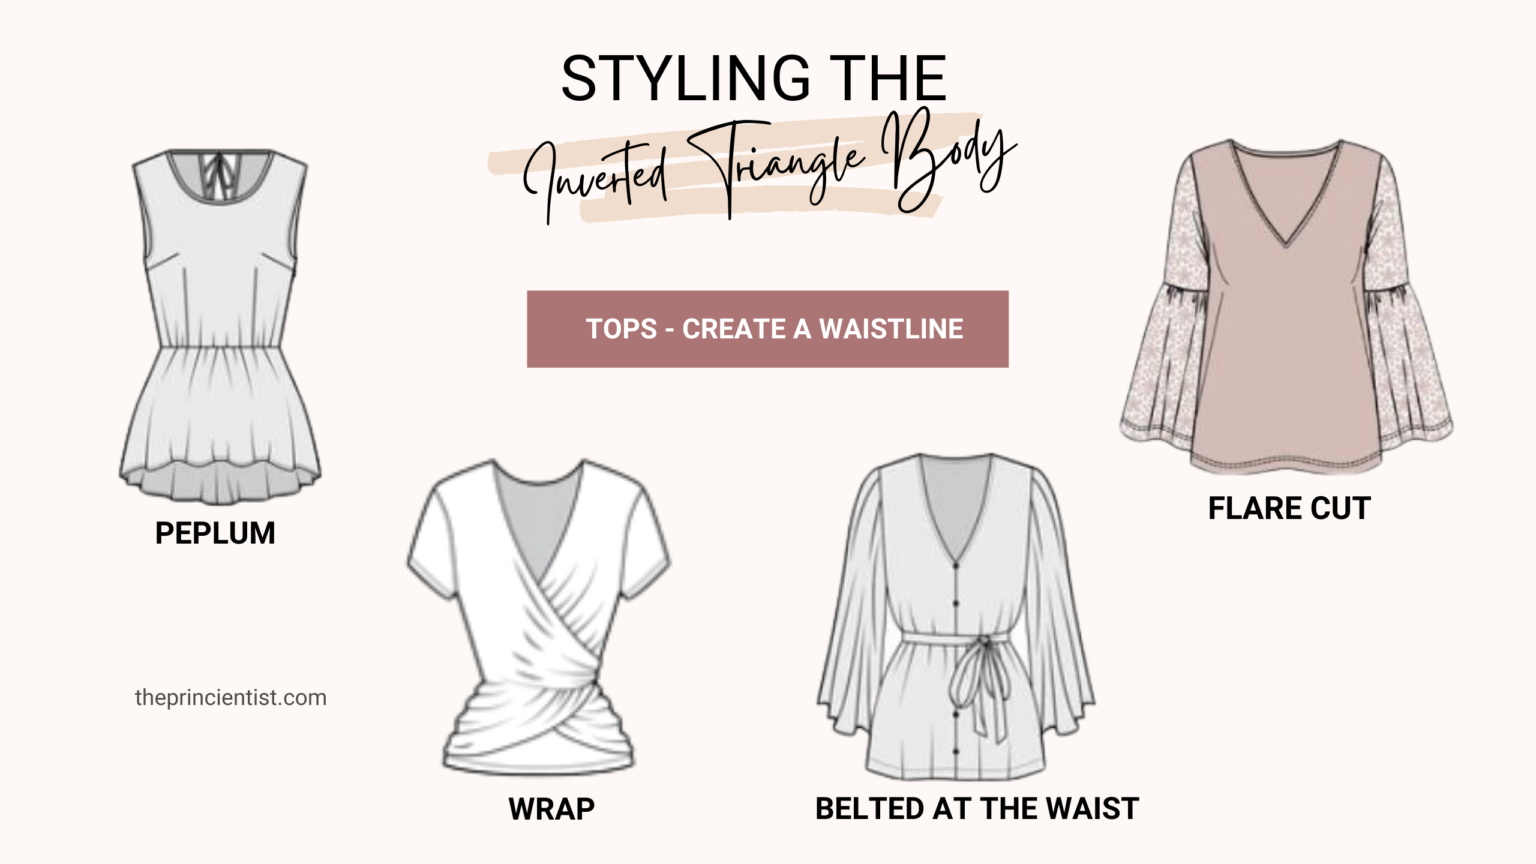 dress the inverted triangle body shape - tops create waistilne